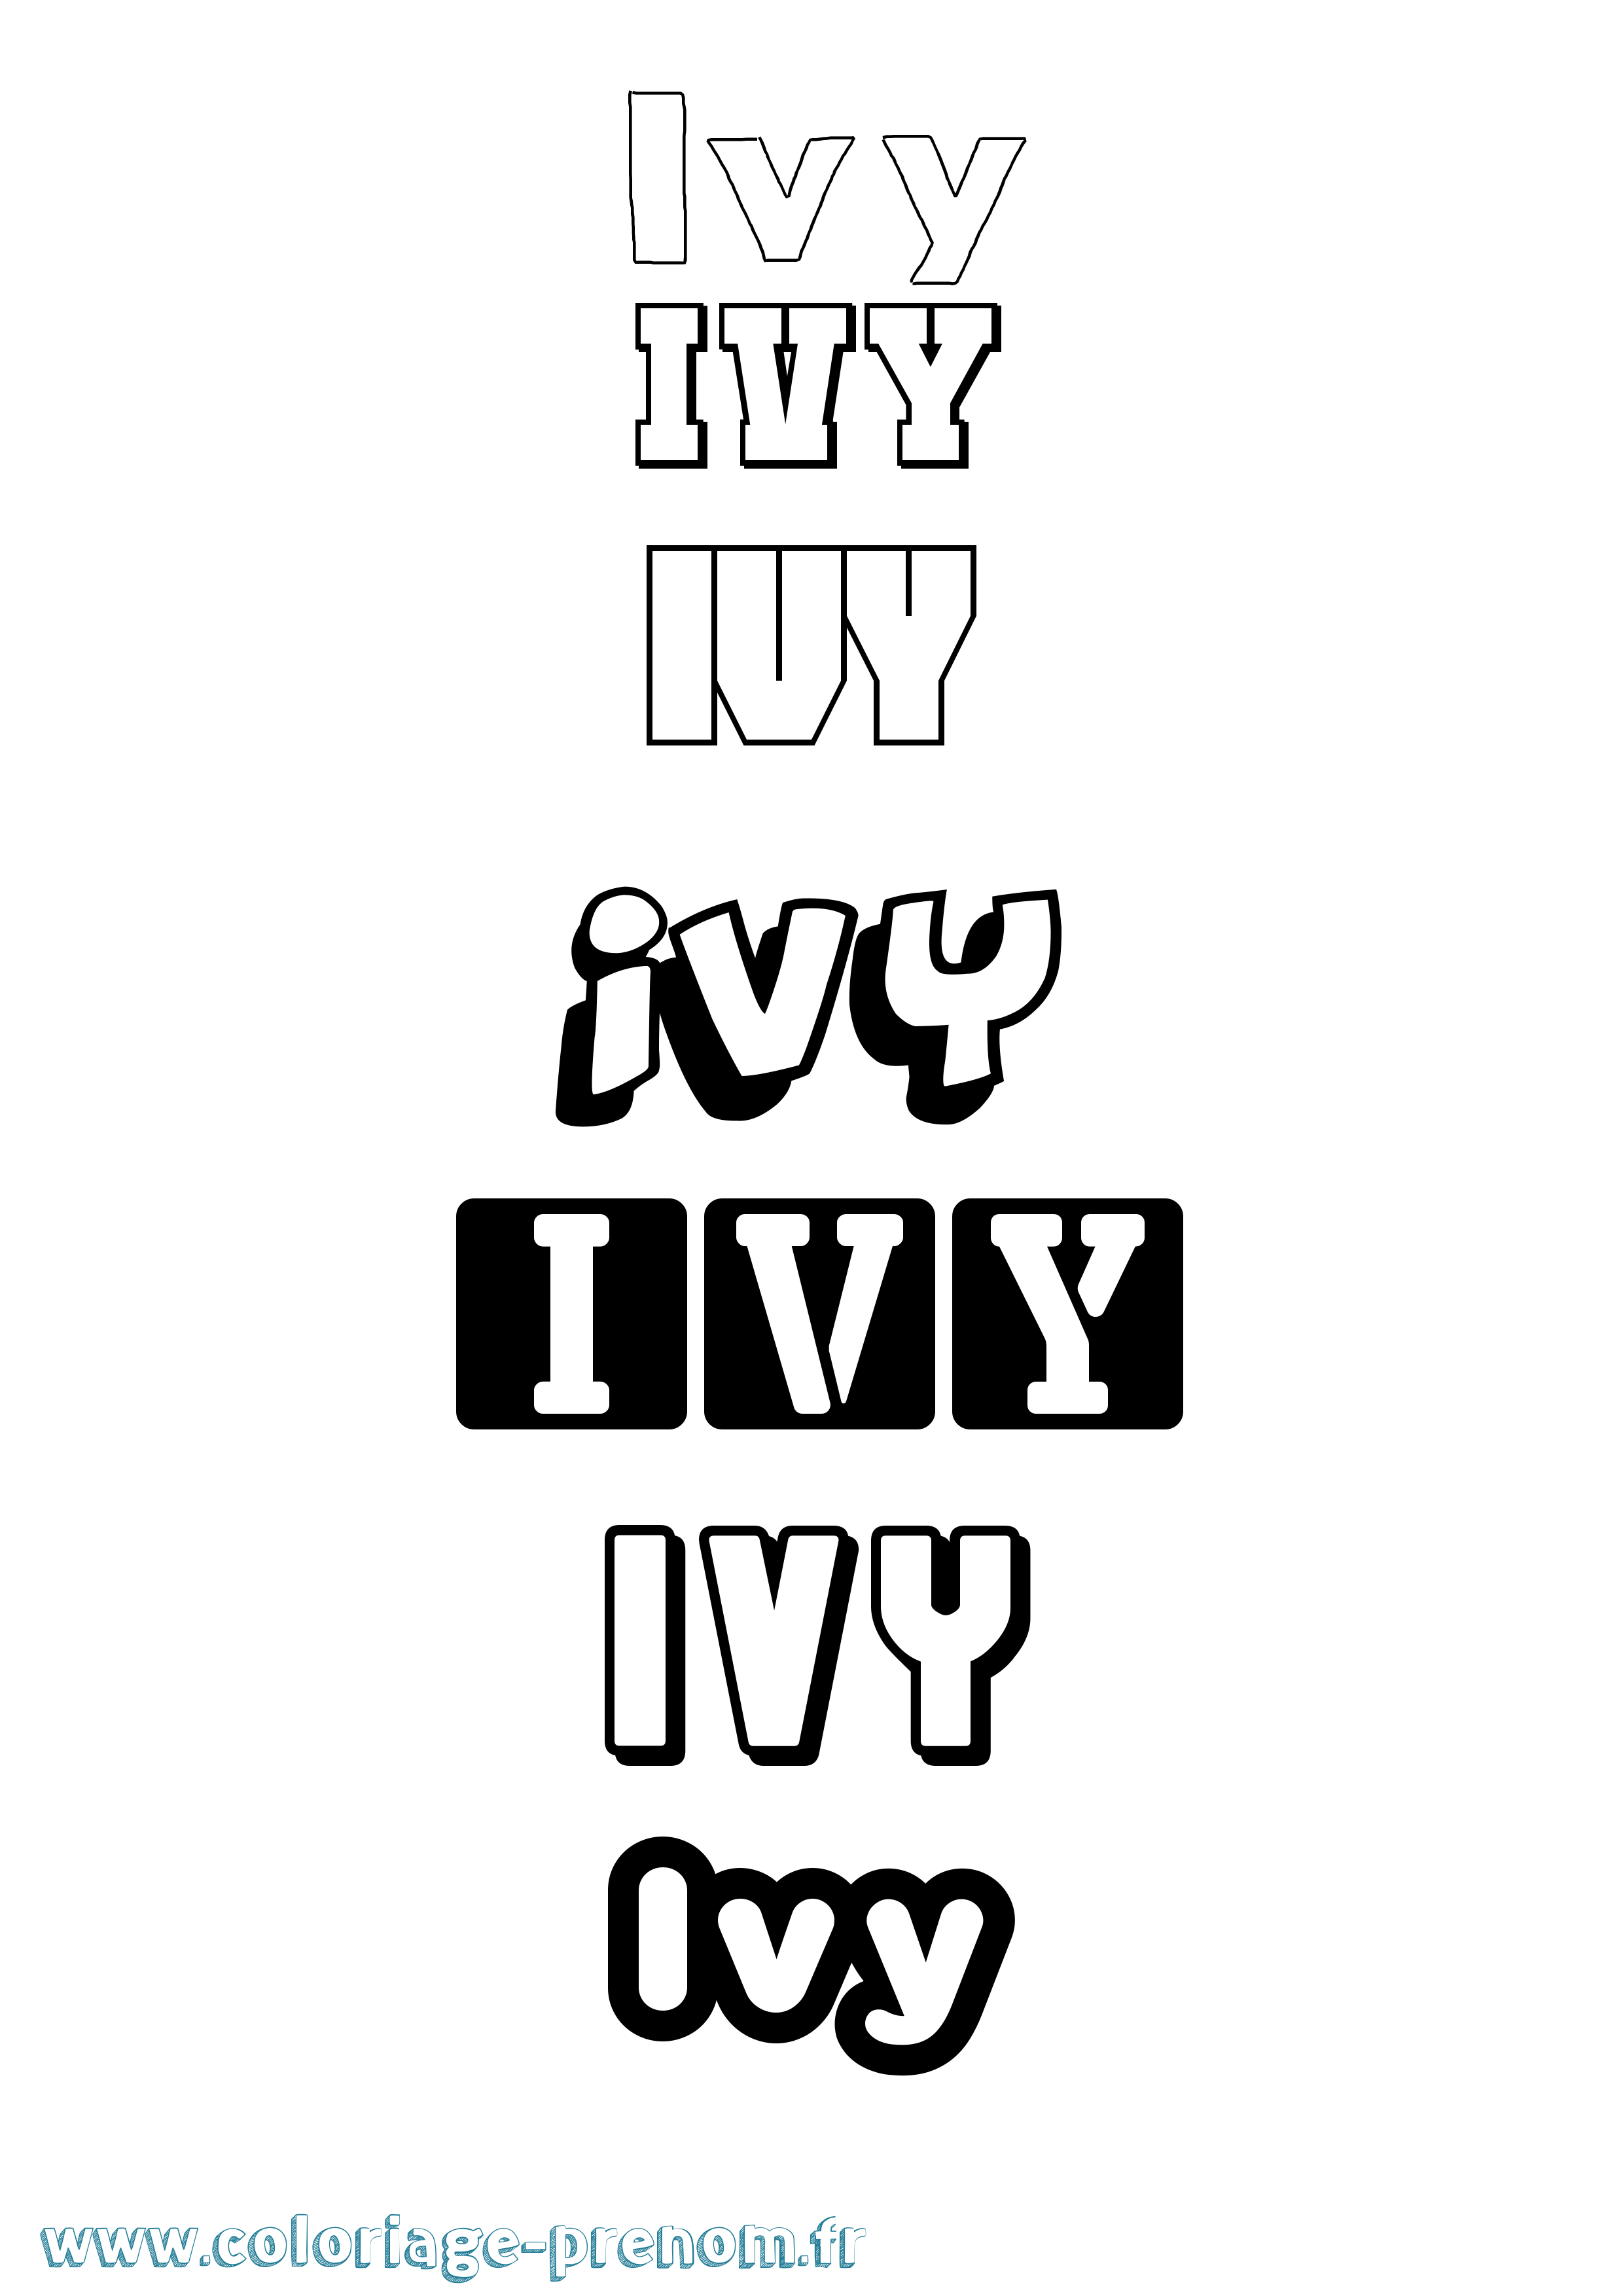 Coloriage prénom Ivy Simple